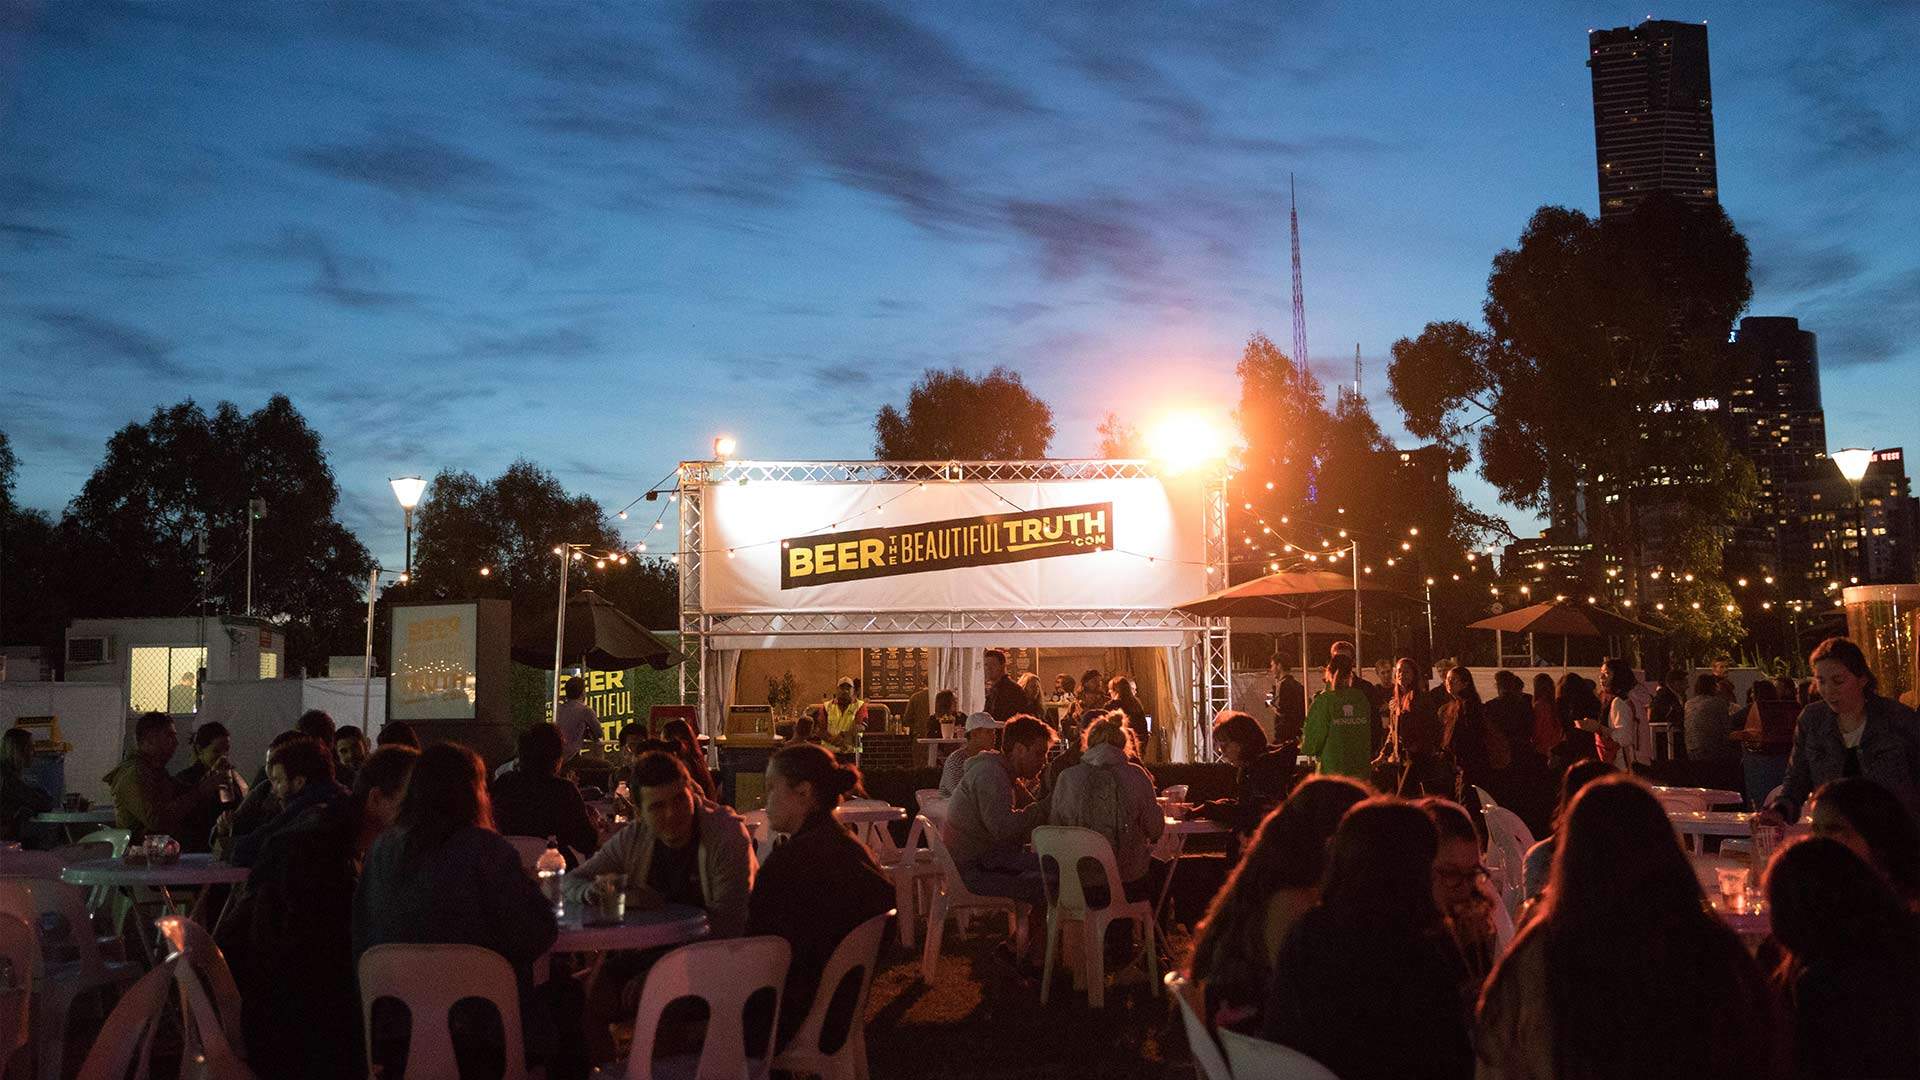 Melbourne's Huge Outdoor Night Noodle Markets Are Back for 2019